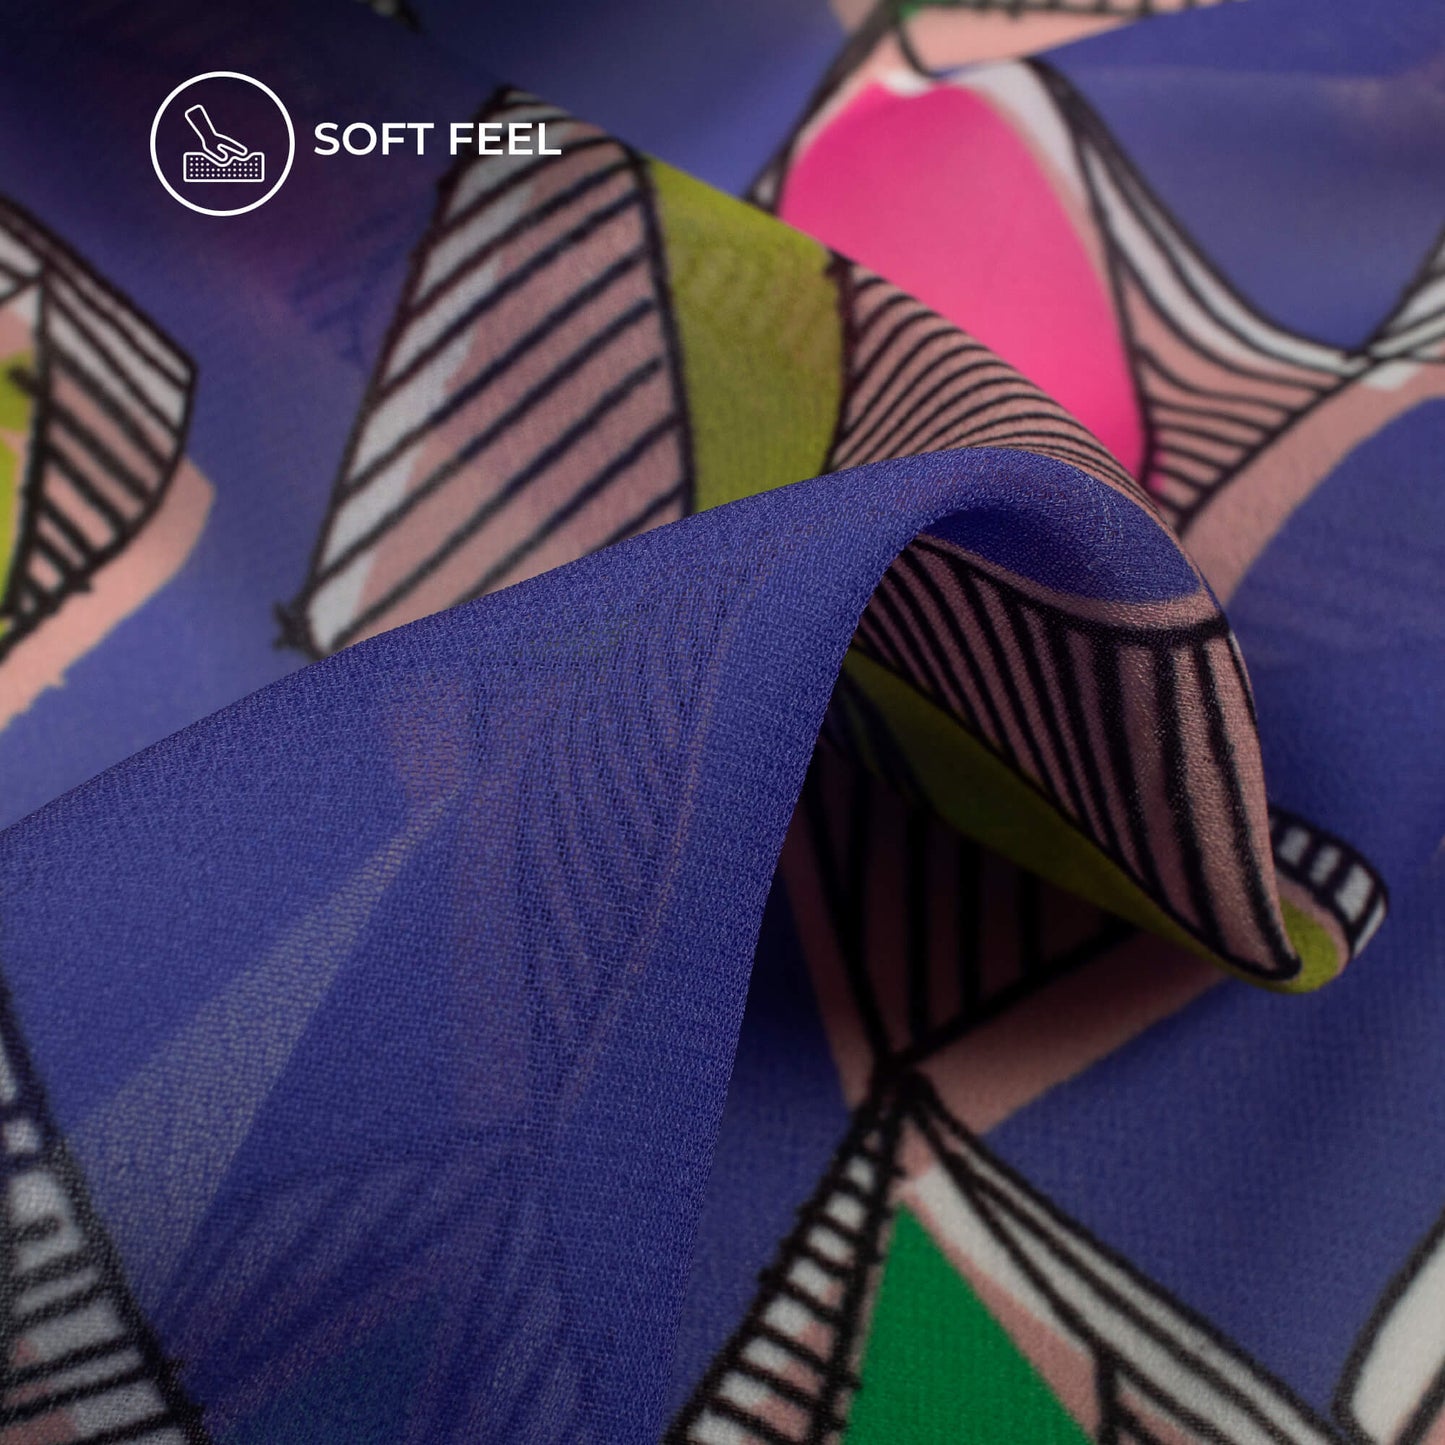 Trendy Geometric Digital Print Georgette Fabric